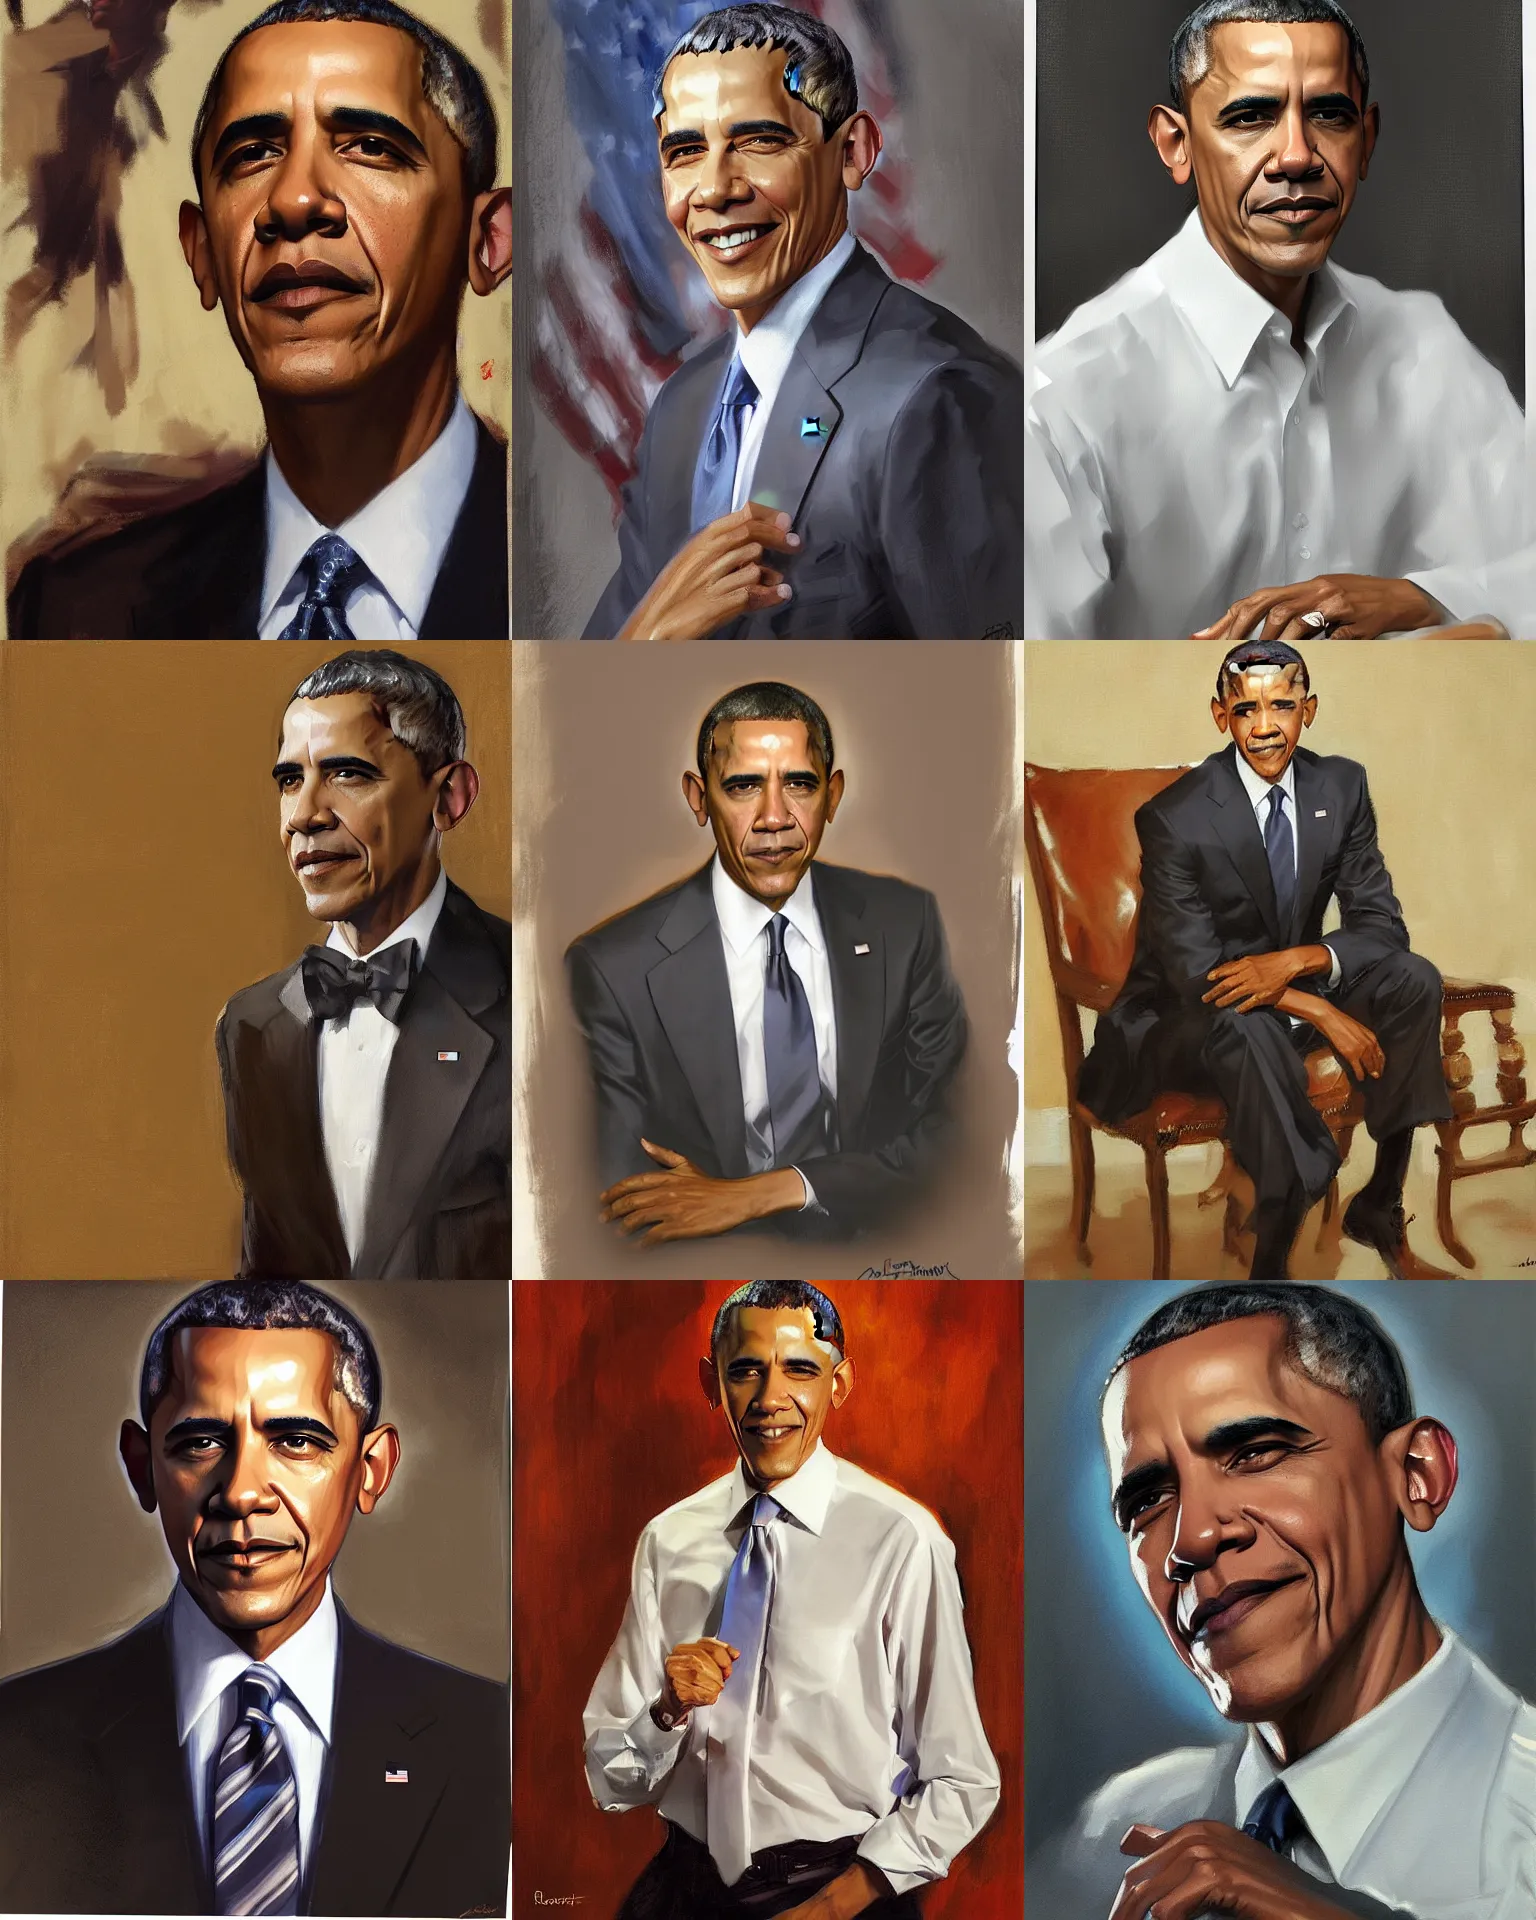 Prompt: obama, portrait painting by loish, leyendecker, richard schmid, craig mullins, john singer sargent, mandy jurgens, fully clothed